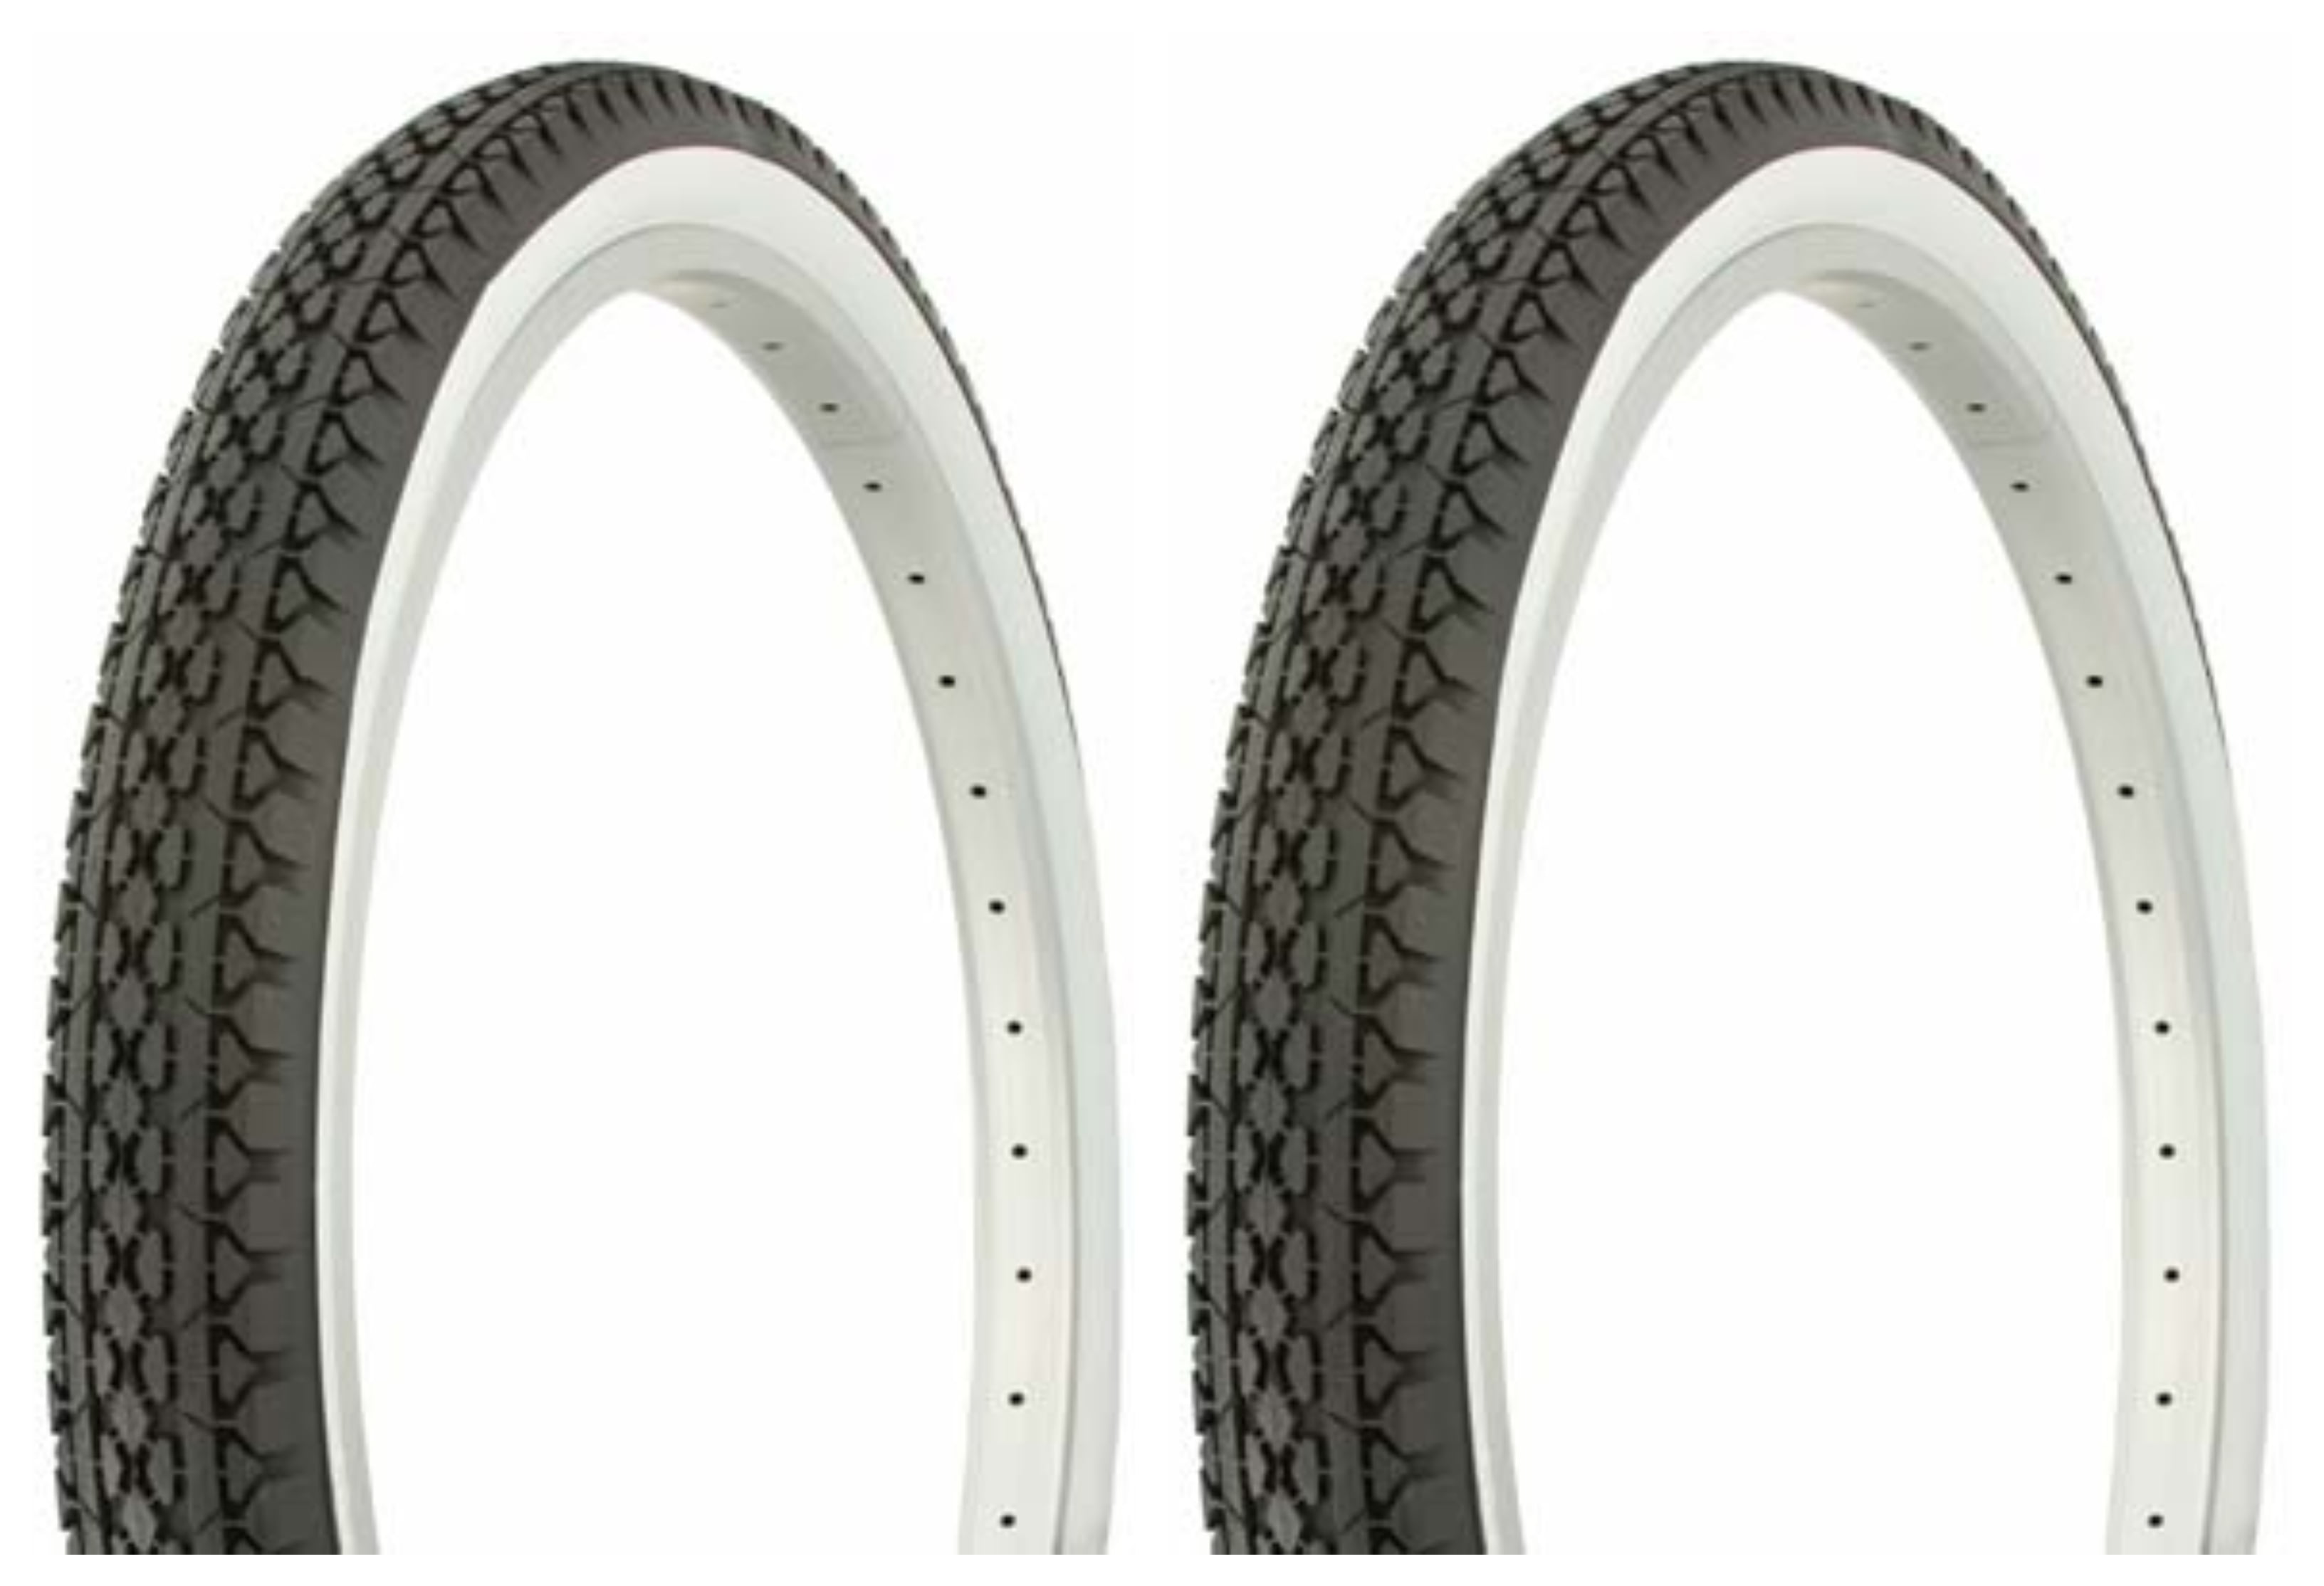 1 Pair of Duro 24"x2.125" Diamond White Wall Tire for Beach Cruiser Bicycle 